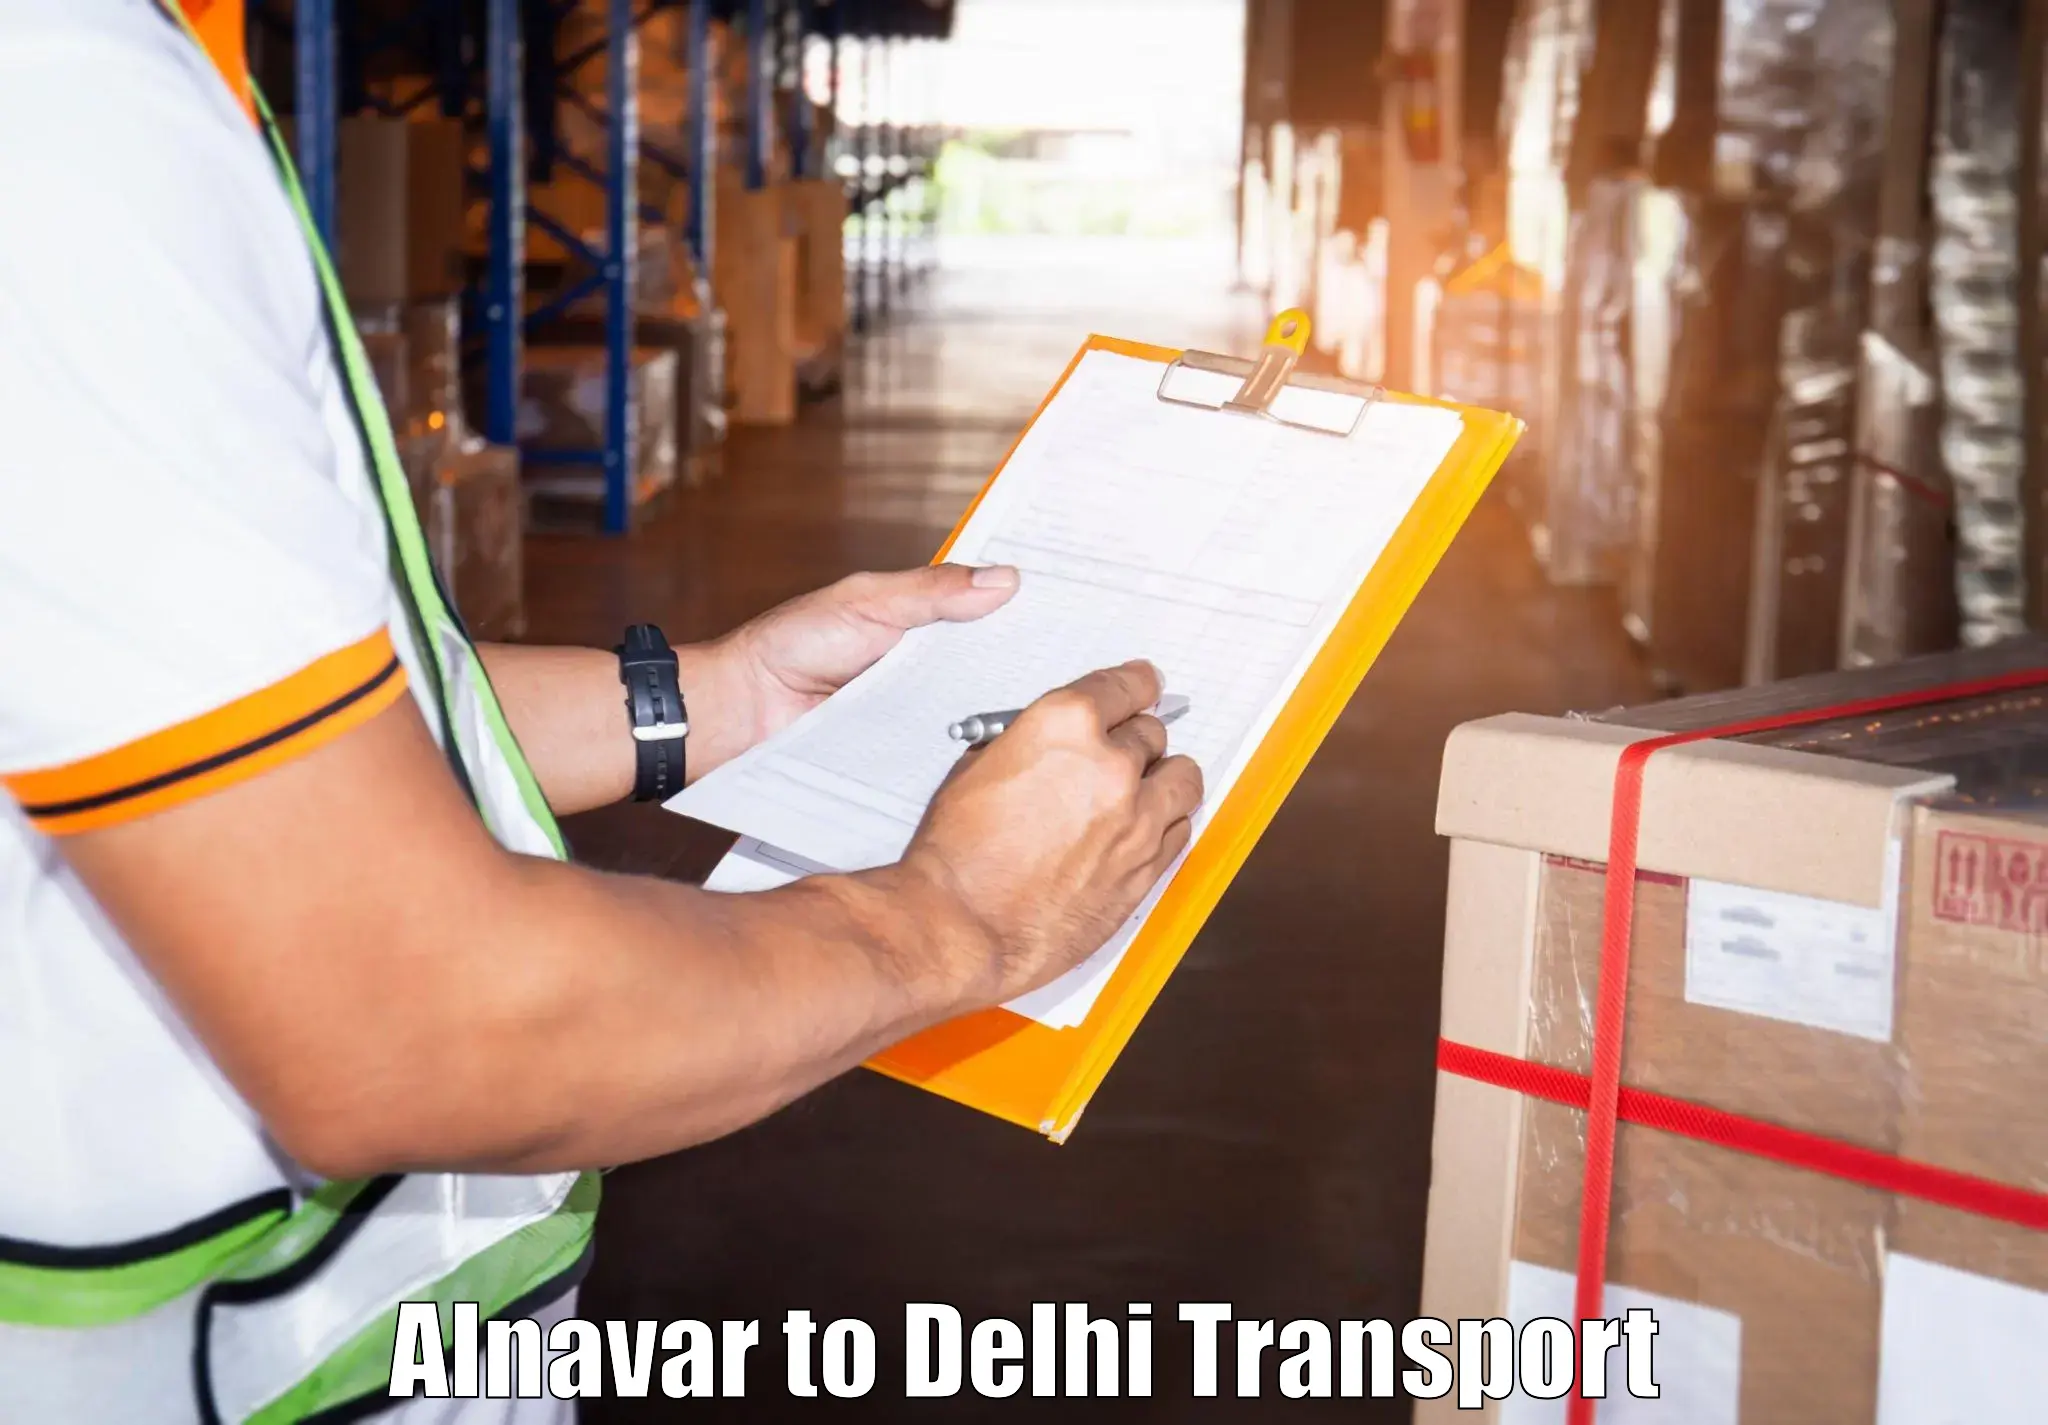 Delivery service Alnavar to Delhi